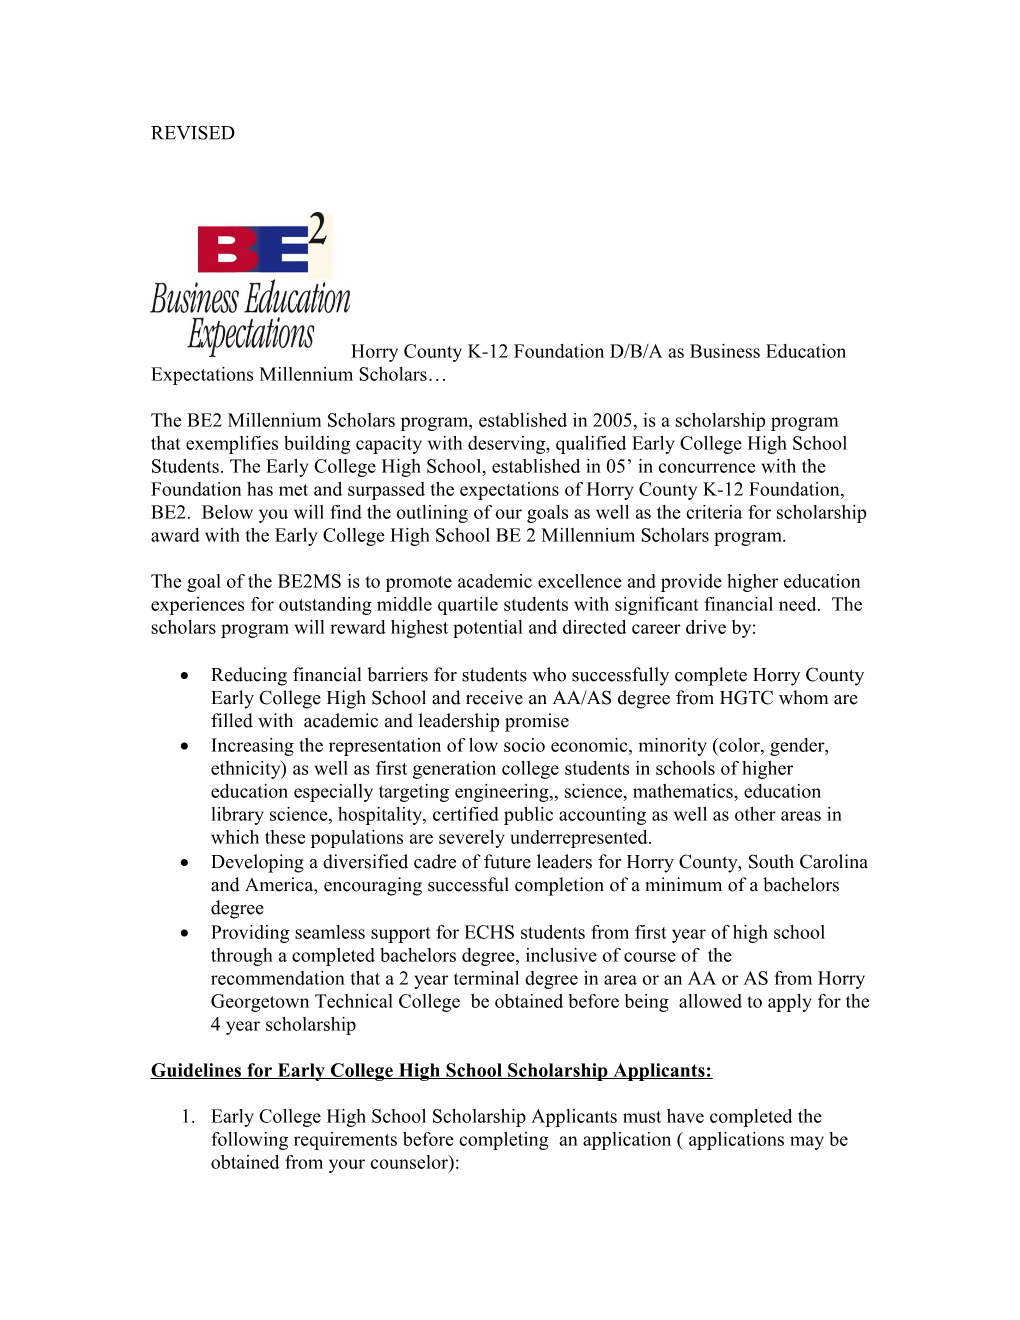 Horry County K-12 Foundation D/B/A As Business Education Expectations Millennium Scholars